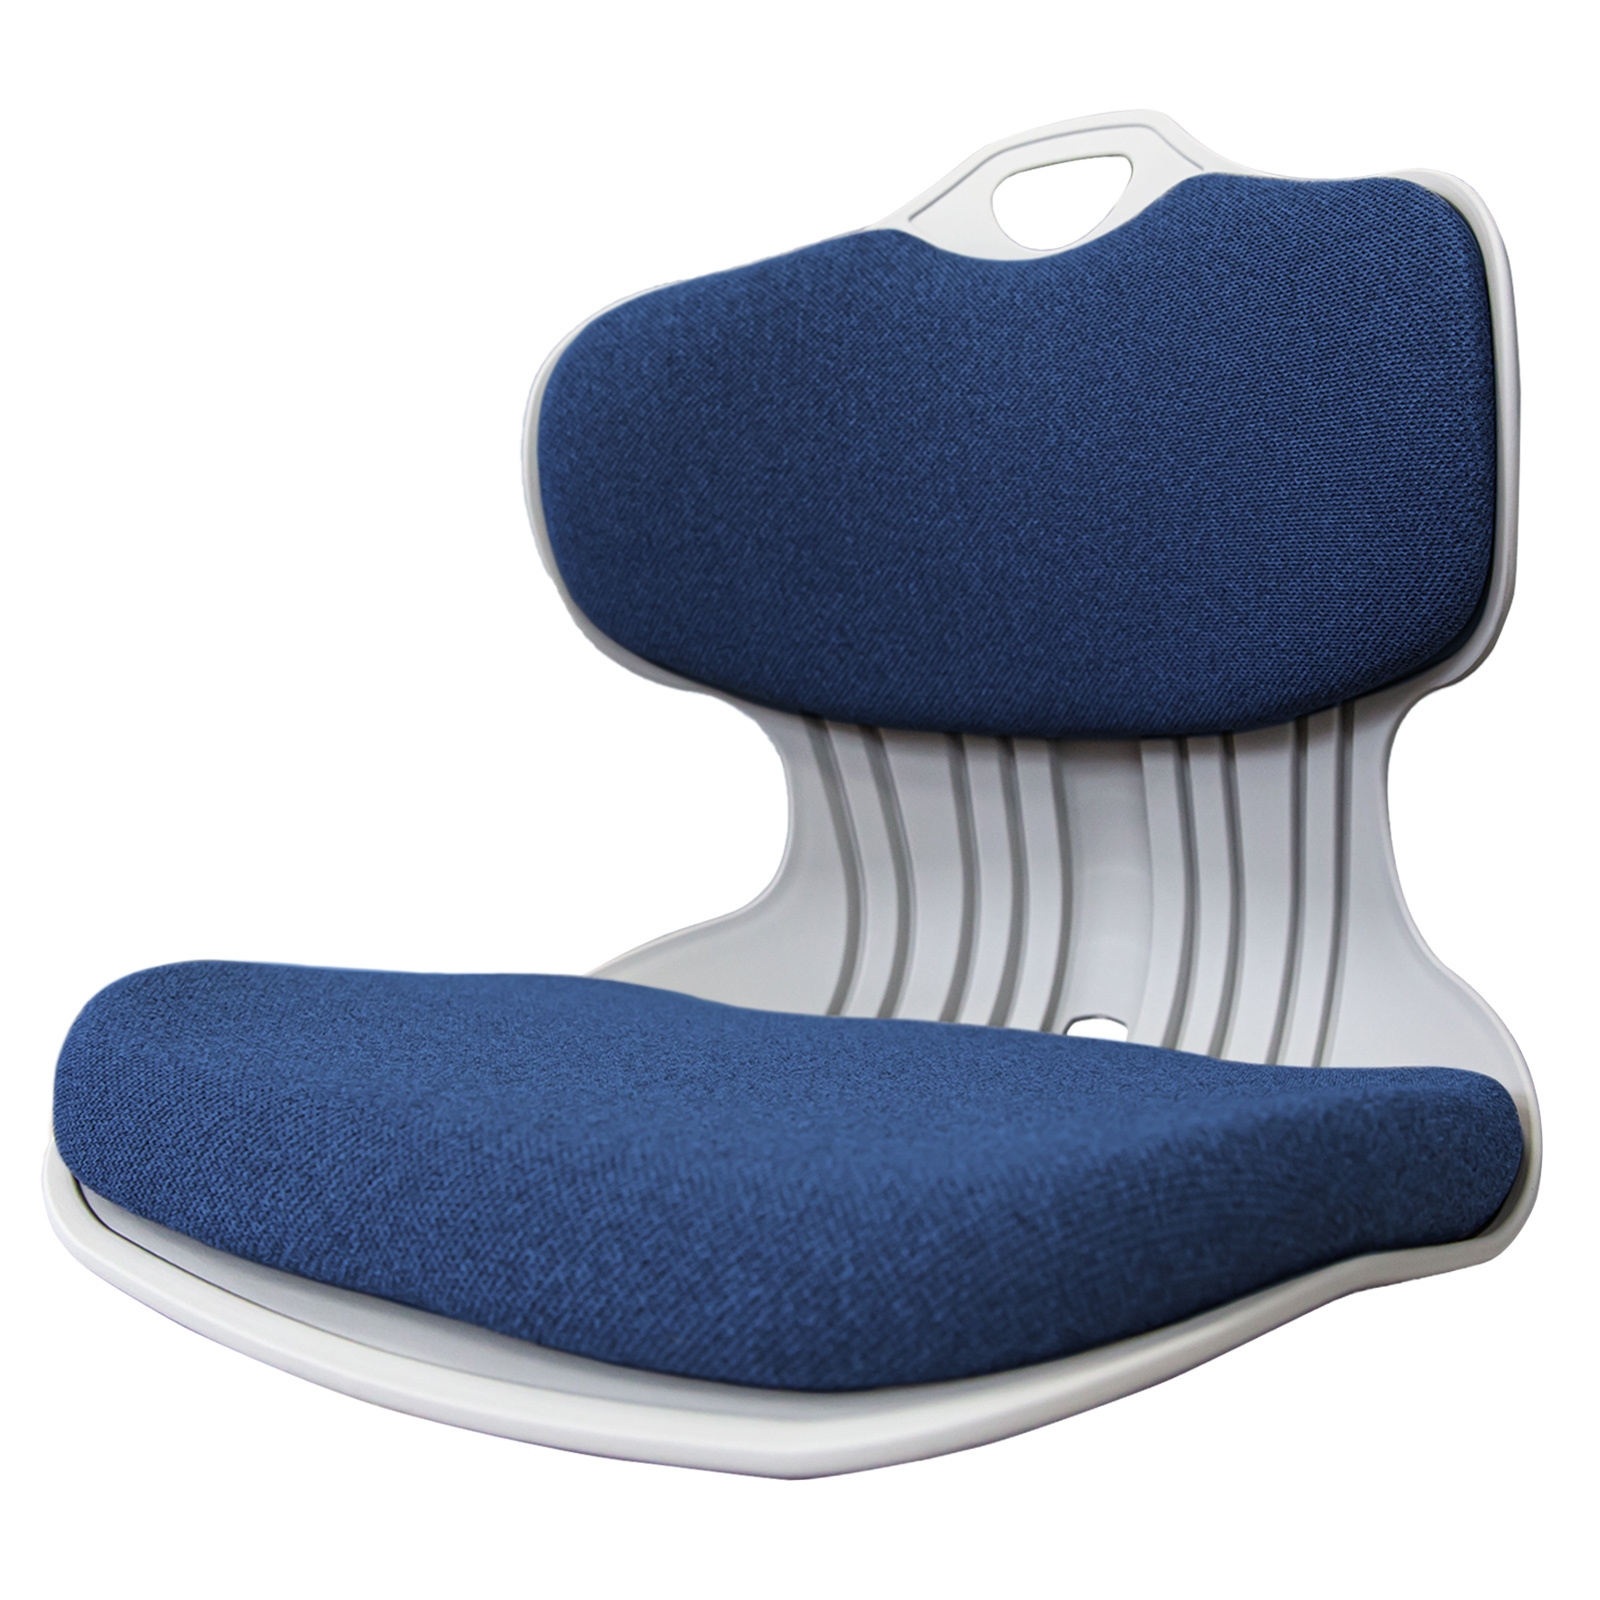 Korean Slender Posture Correction Chair - BLUE